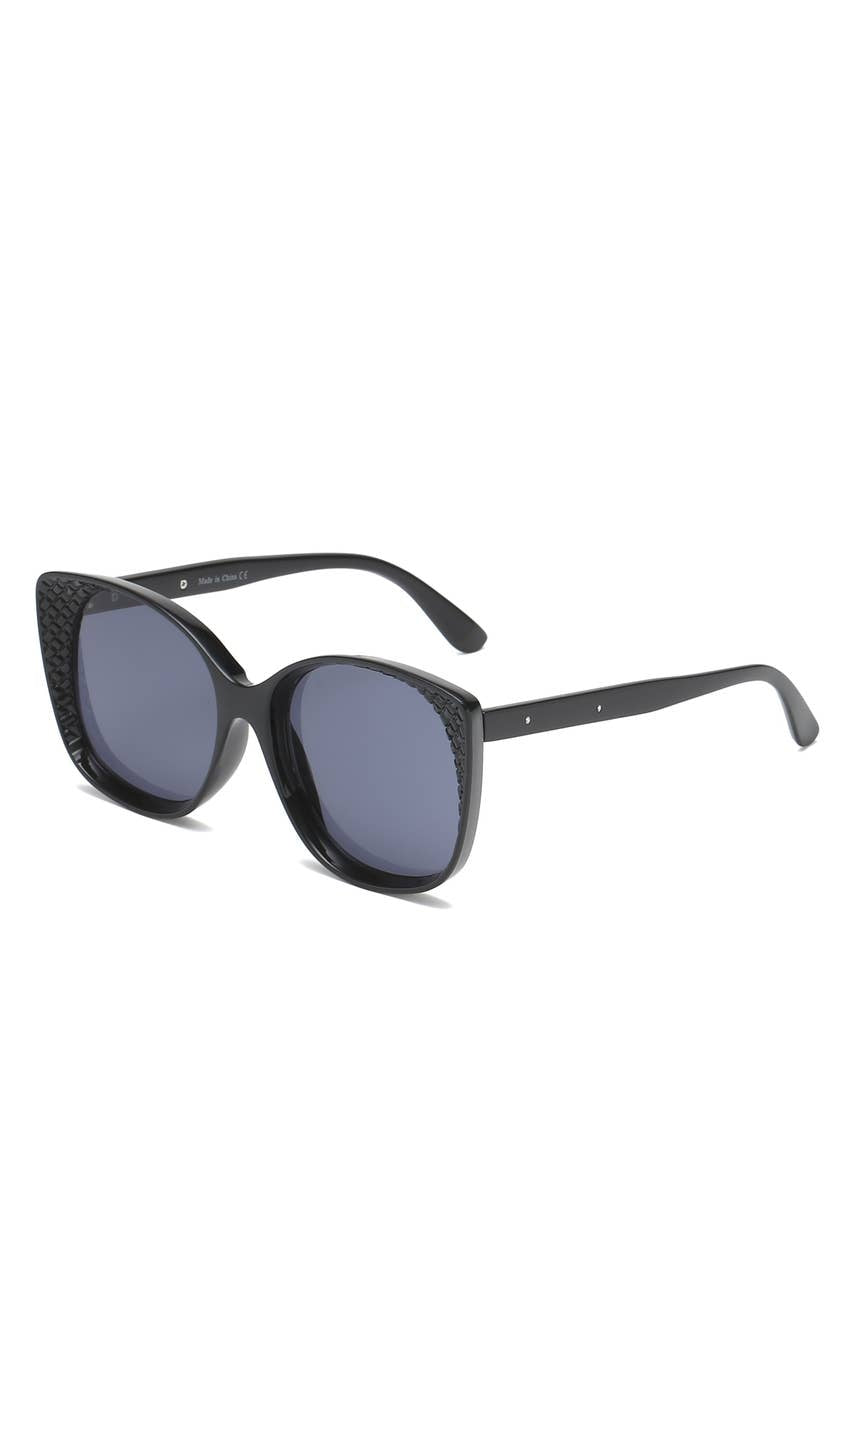 "Chrystlyn" Oversized Cat-Eye Vintage Fashion Sunglasses